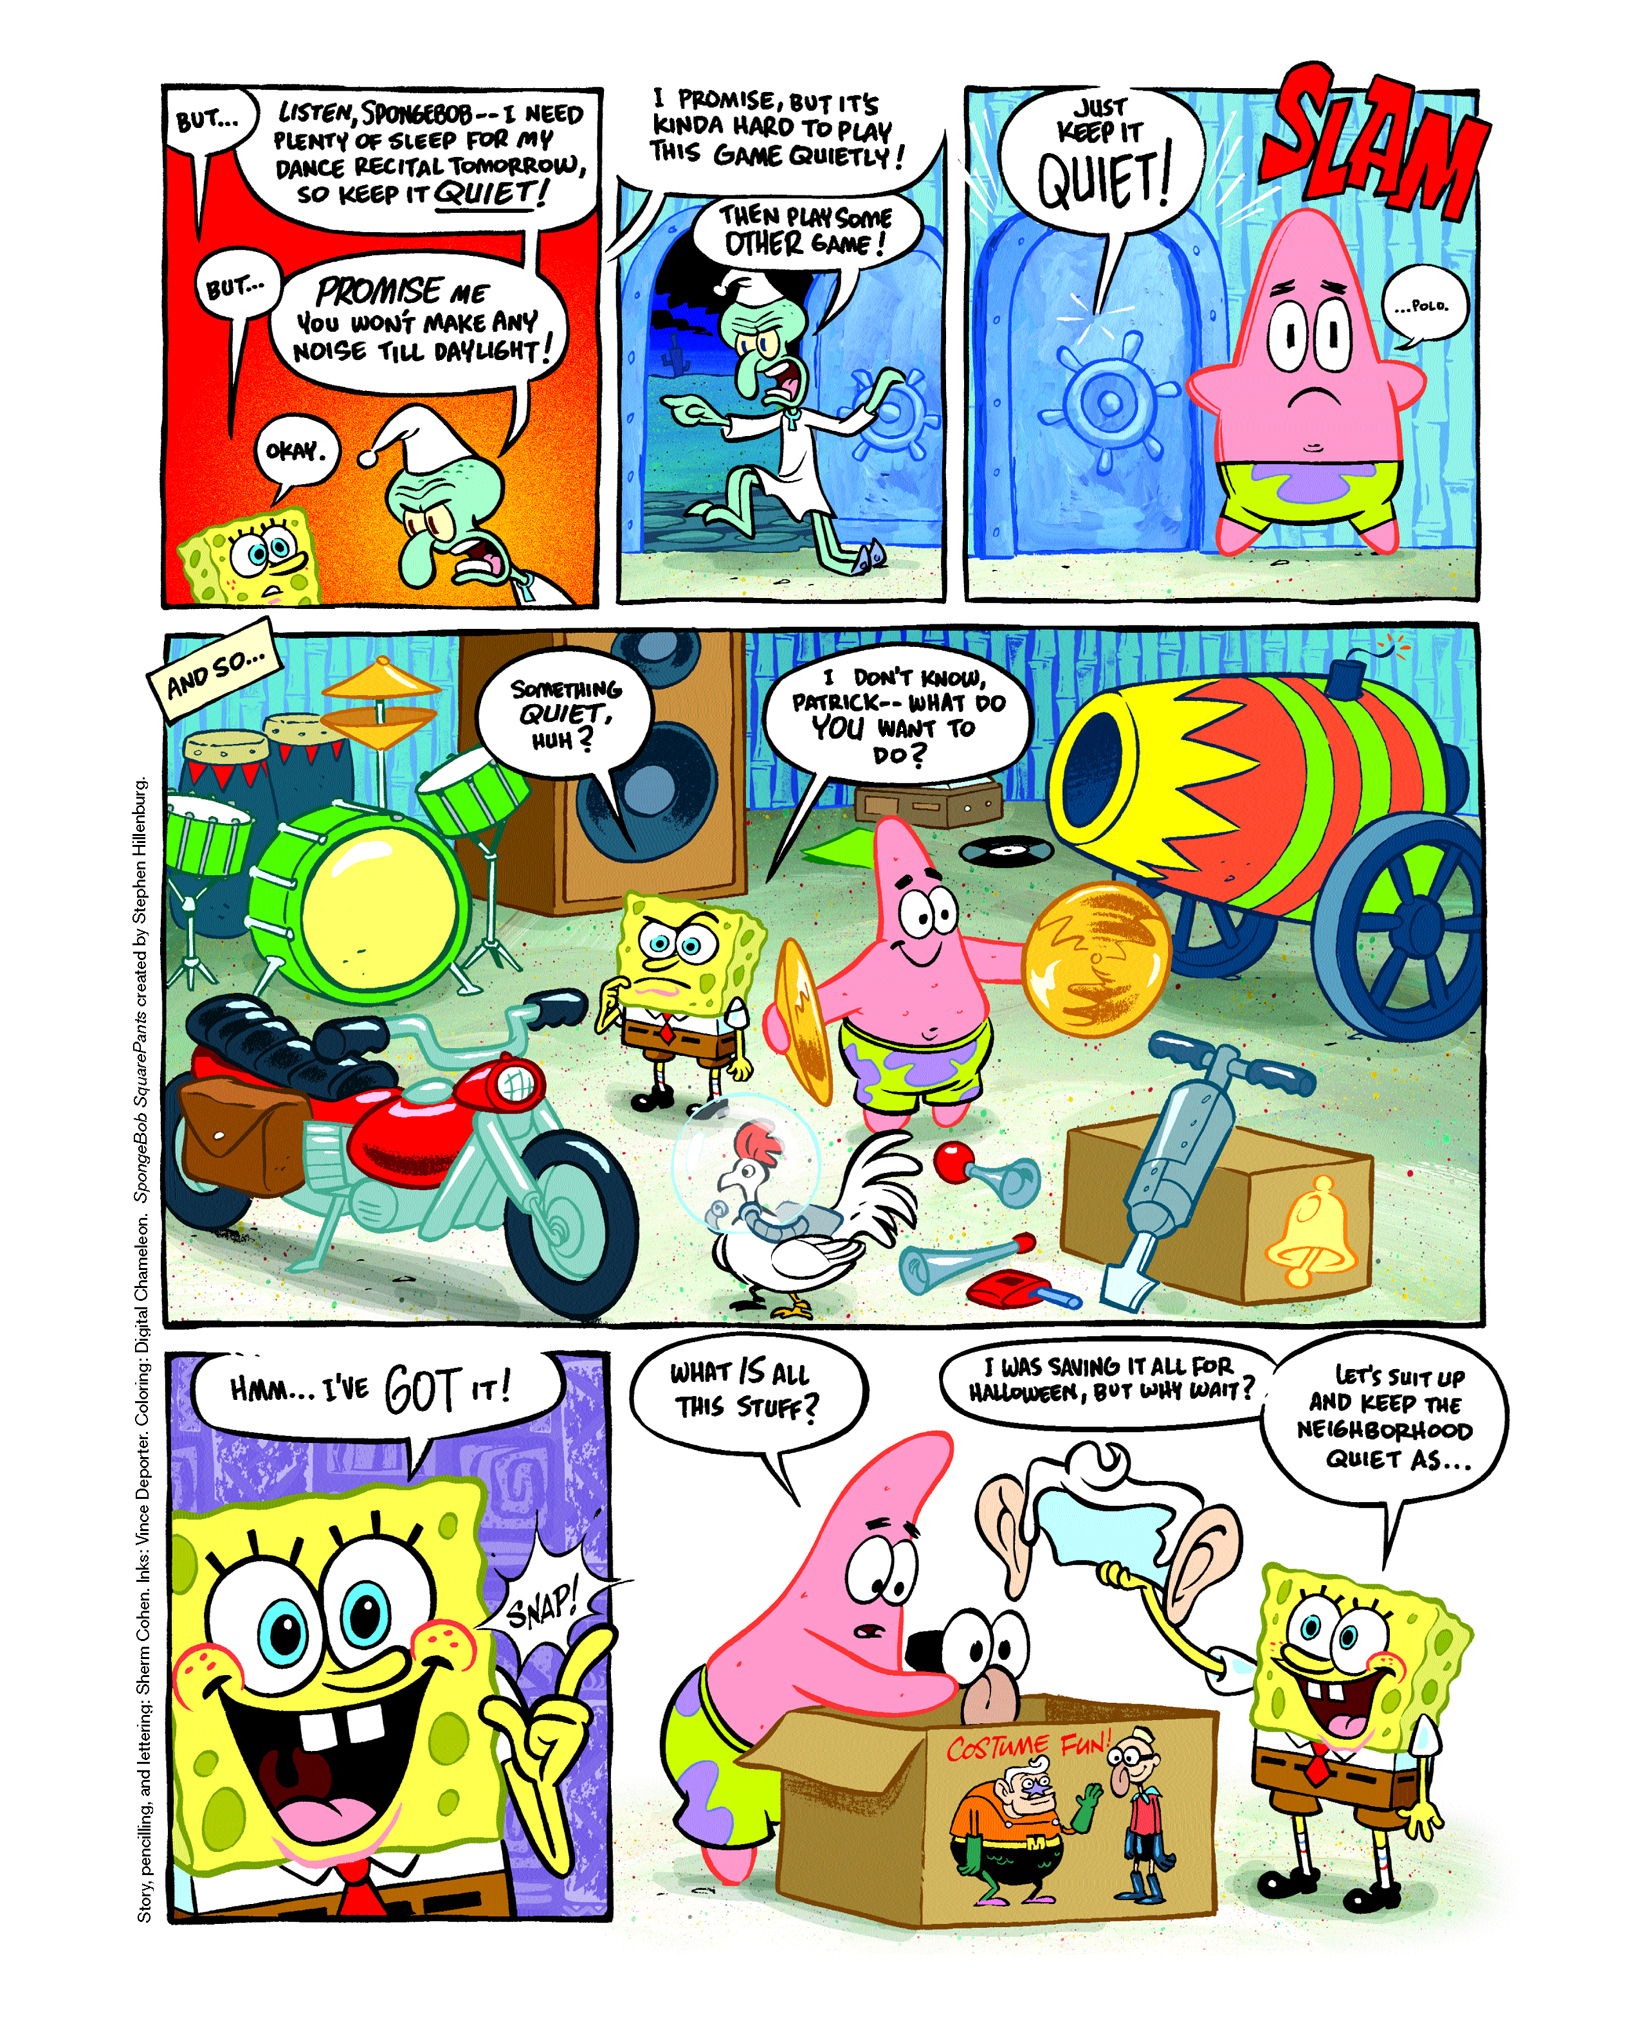 Super Suspicion Spongebob Tale Notes From Pellucidar 2 SCROLL DOWN